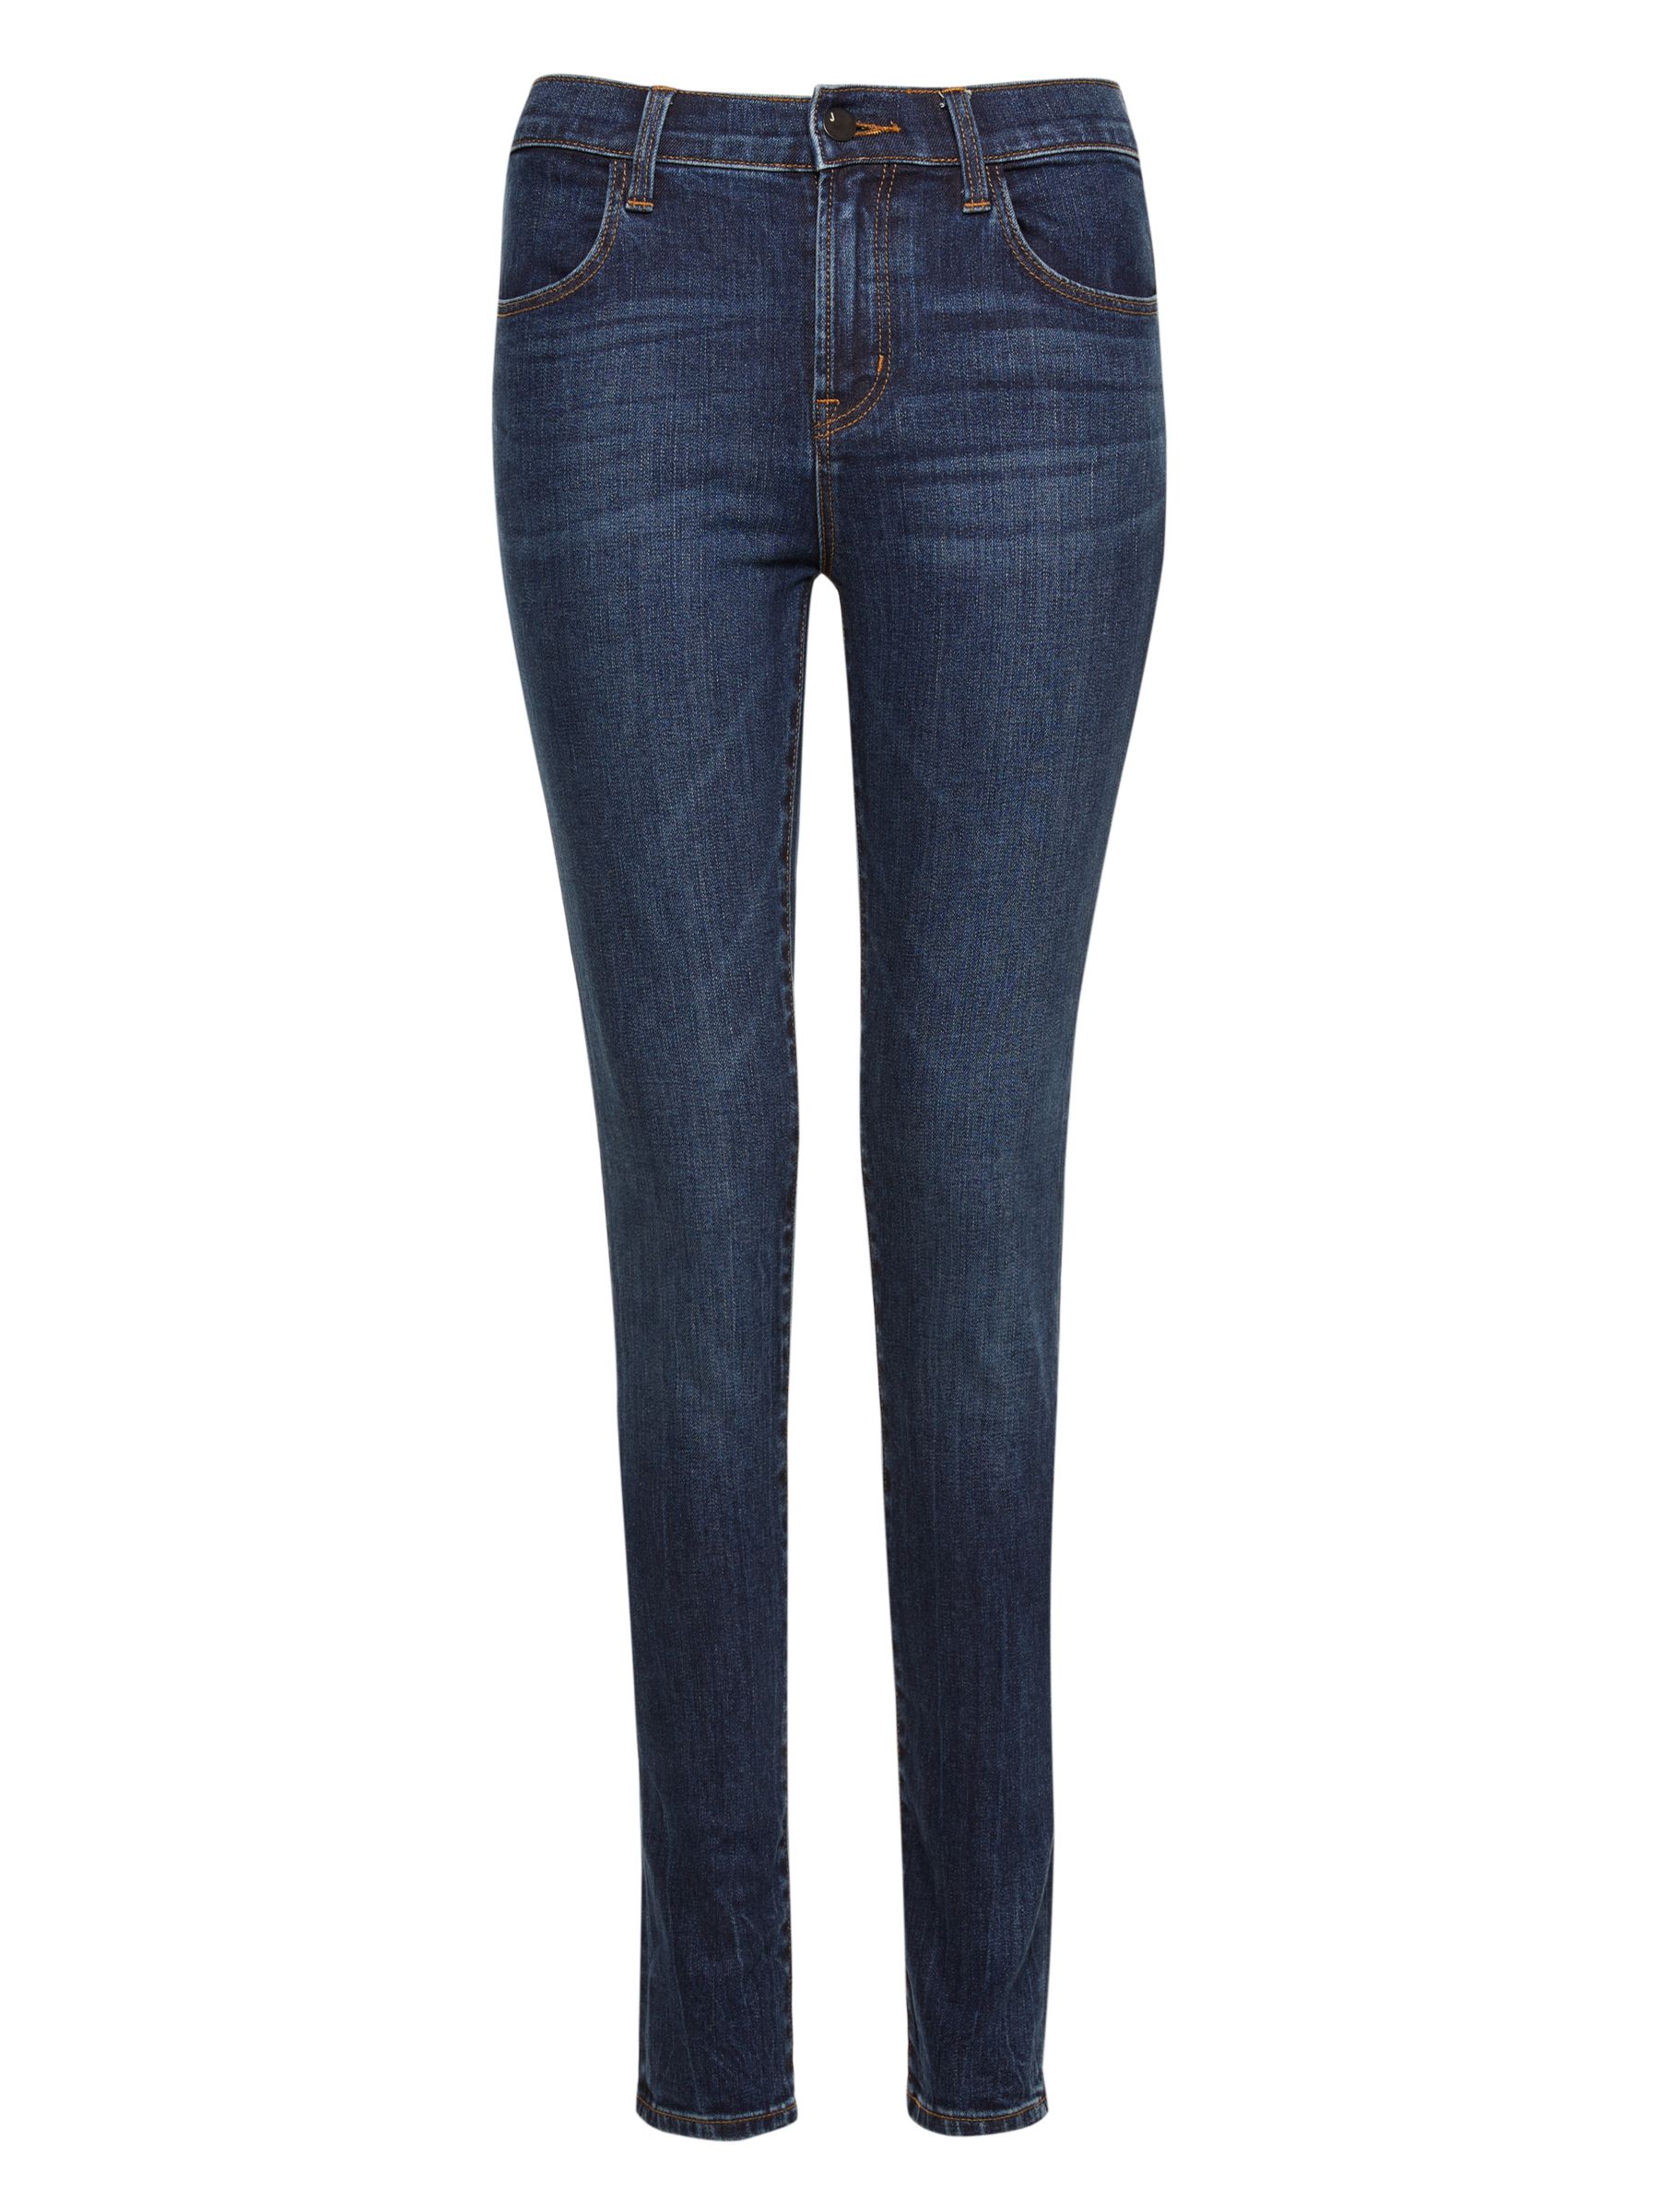 J Brand Maria High Rise Super Skinny Jeans, Mesmeric